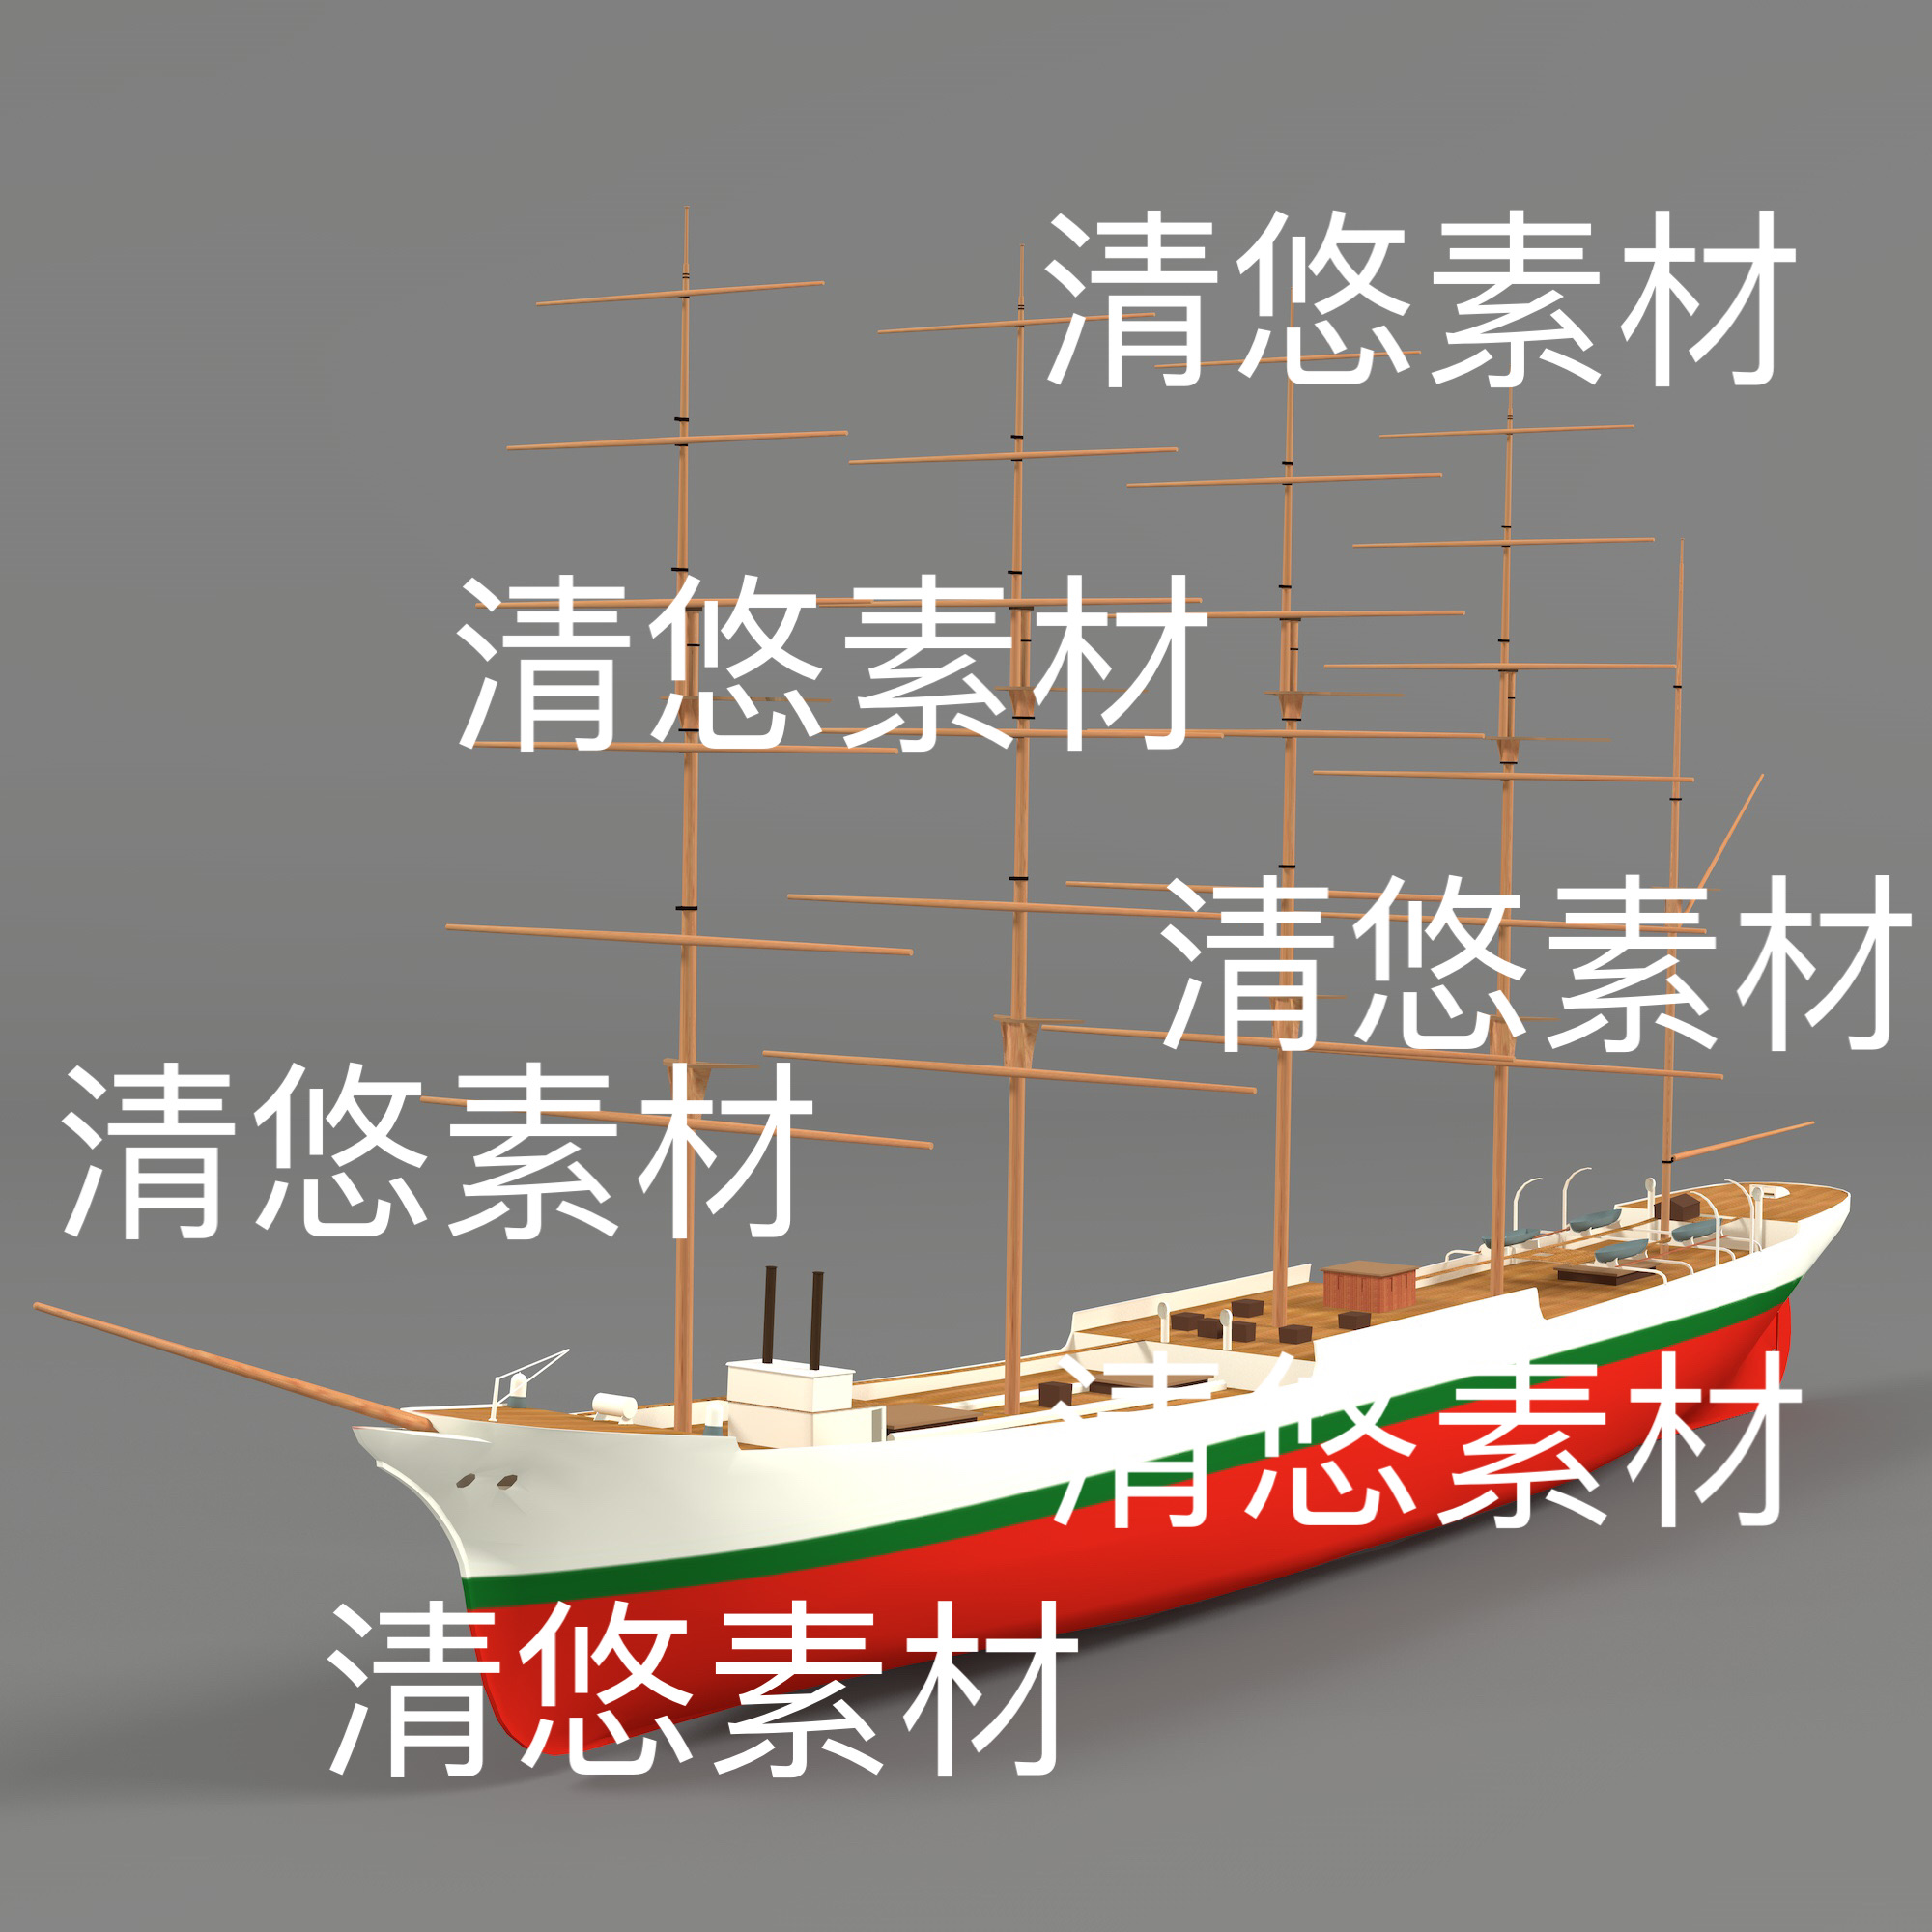 c4d fbx obj格式轮船海上交通工具观光船舶低模文件 非实物D603